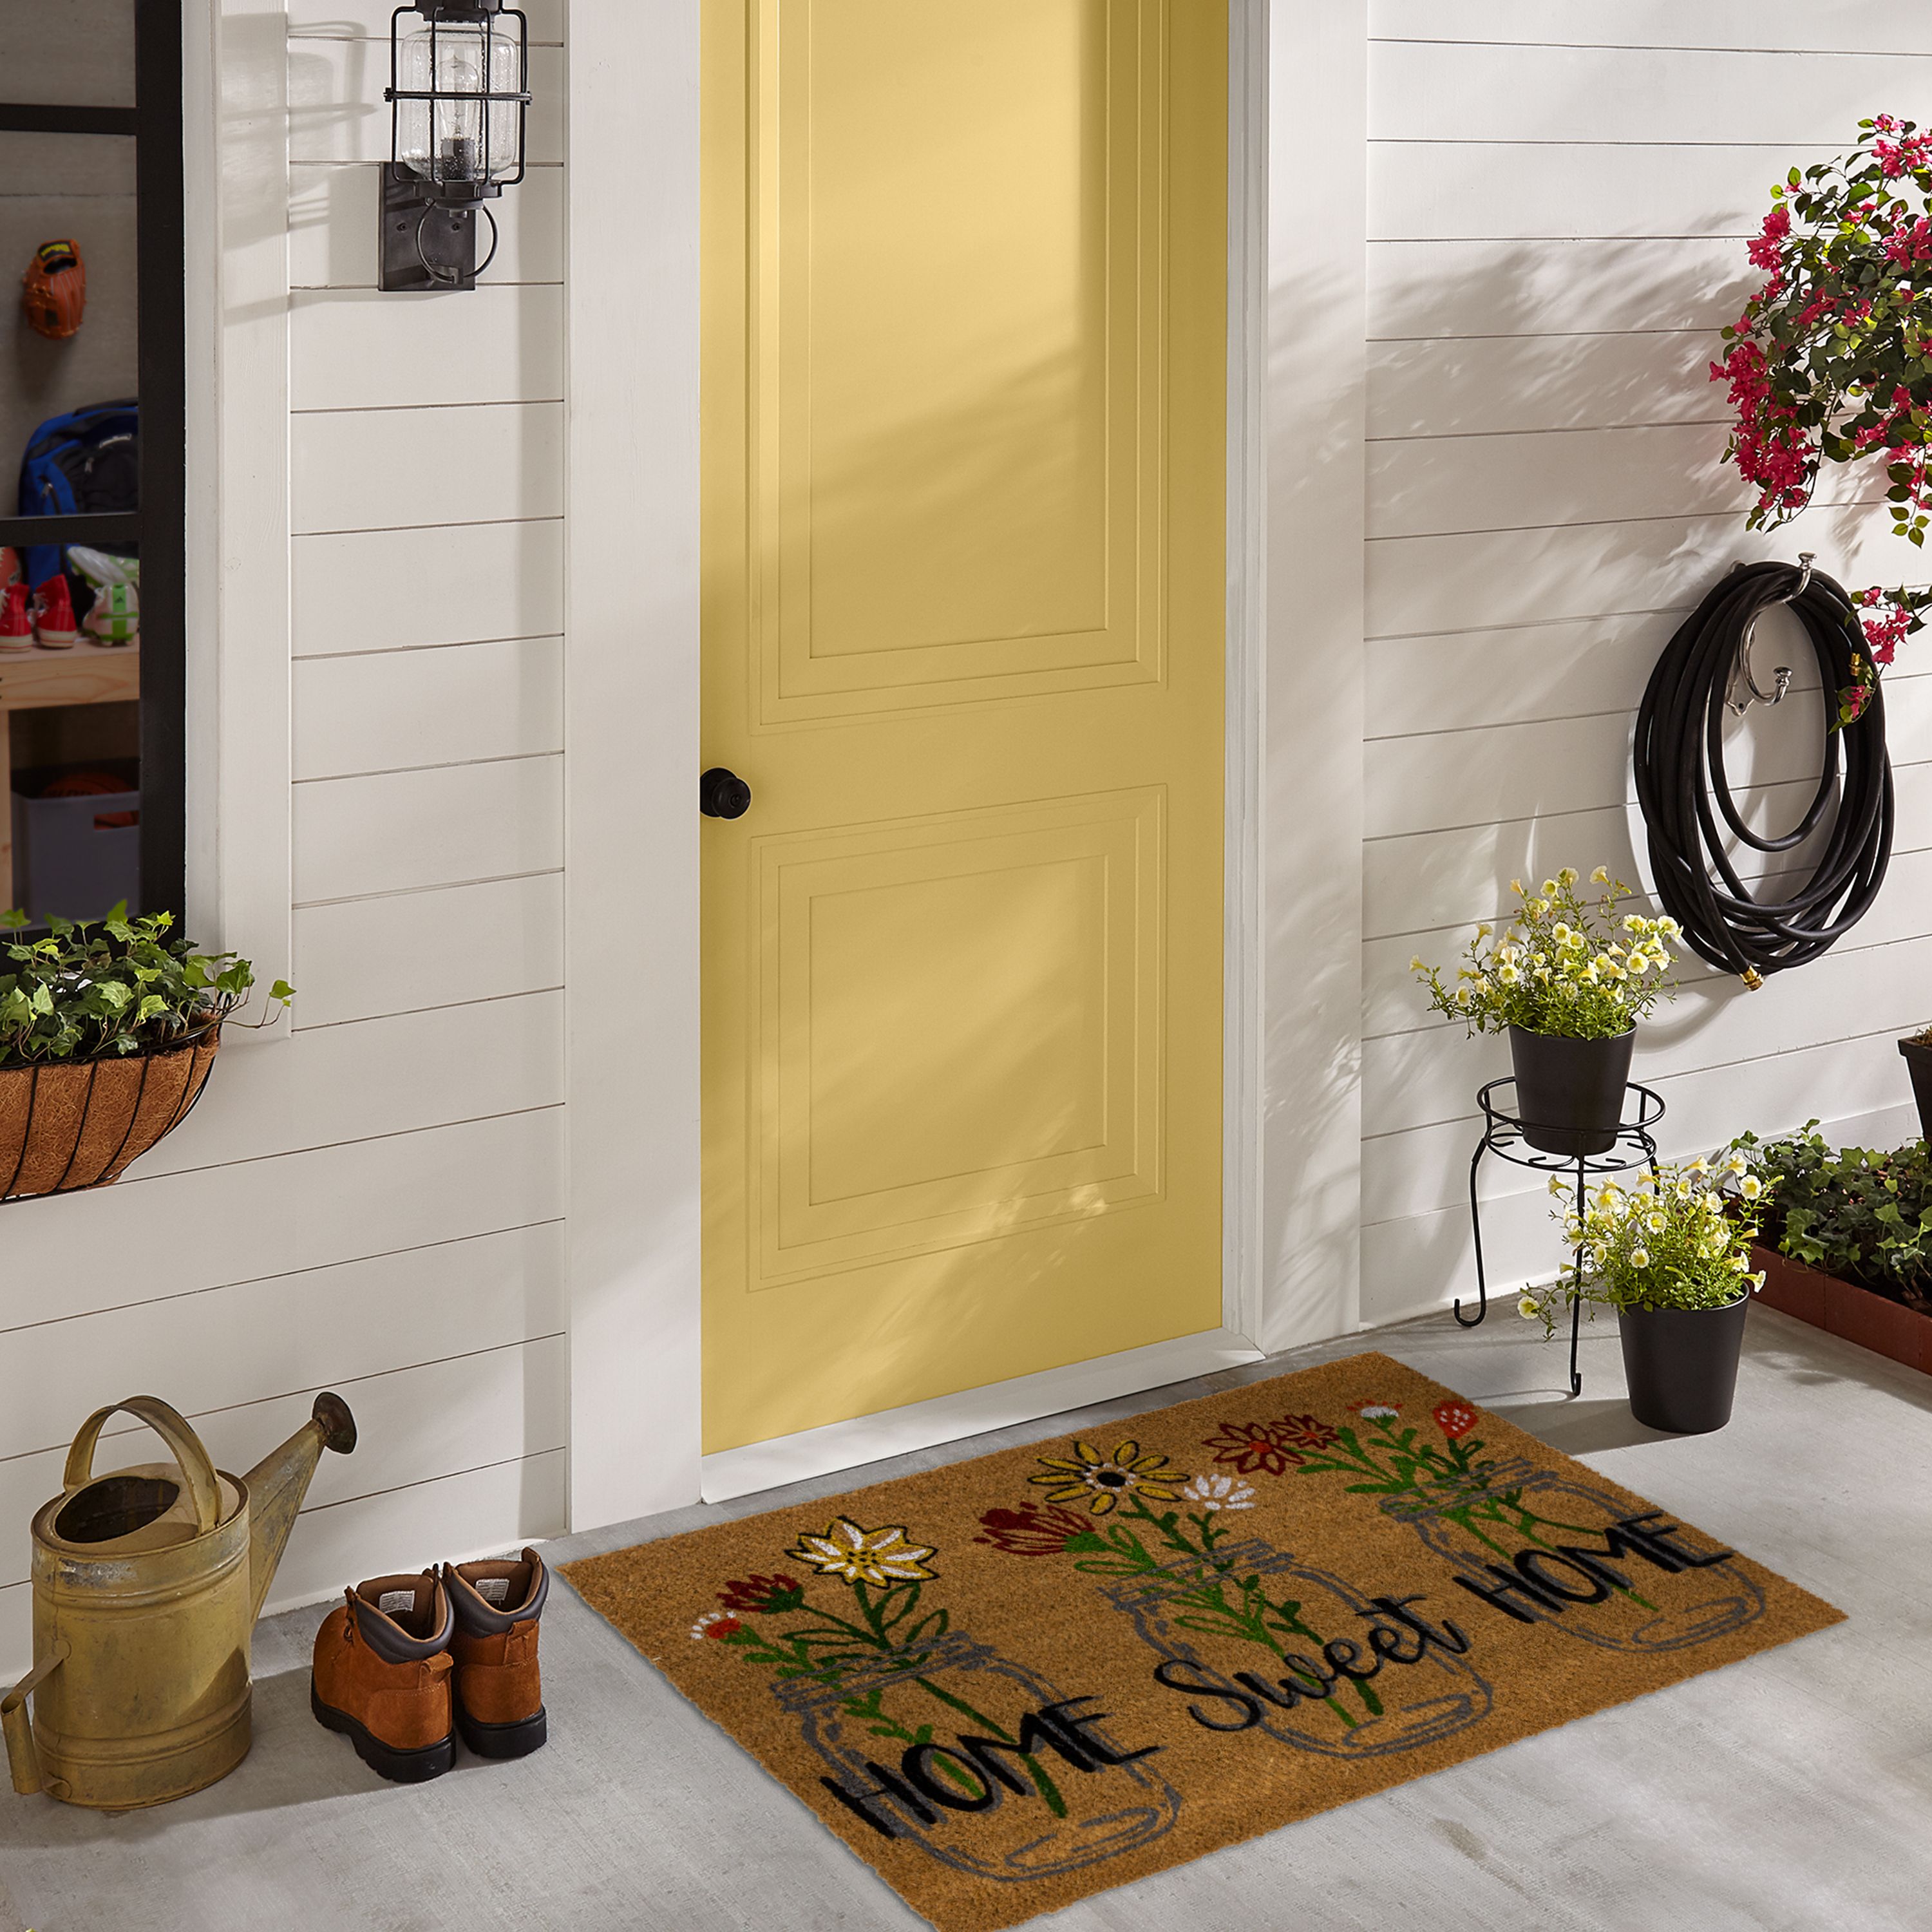 Mainstays Home Sweet Home Mason Jar Coir Outdoor Doormat, Natural, 18" x 30" - image 2 of 2